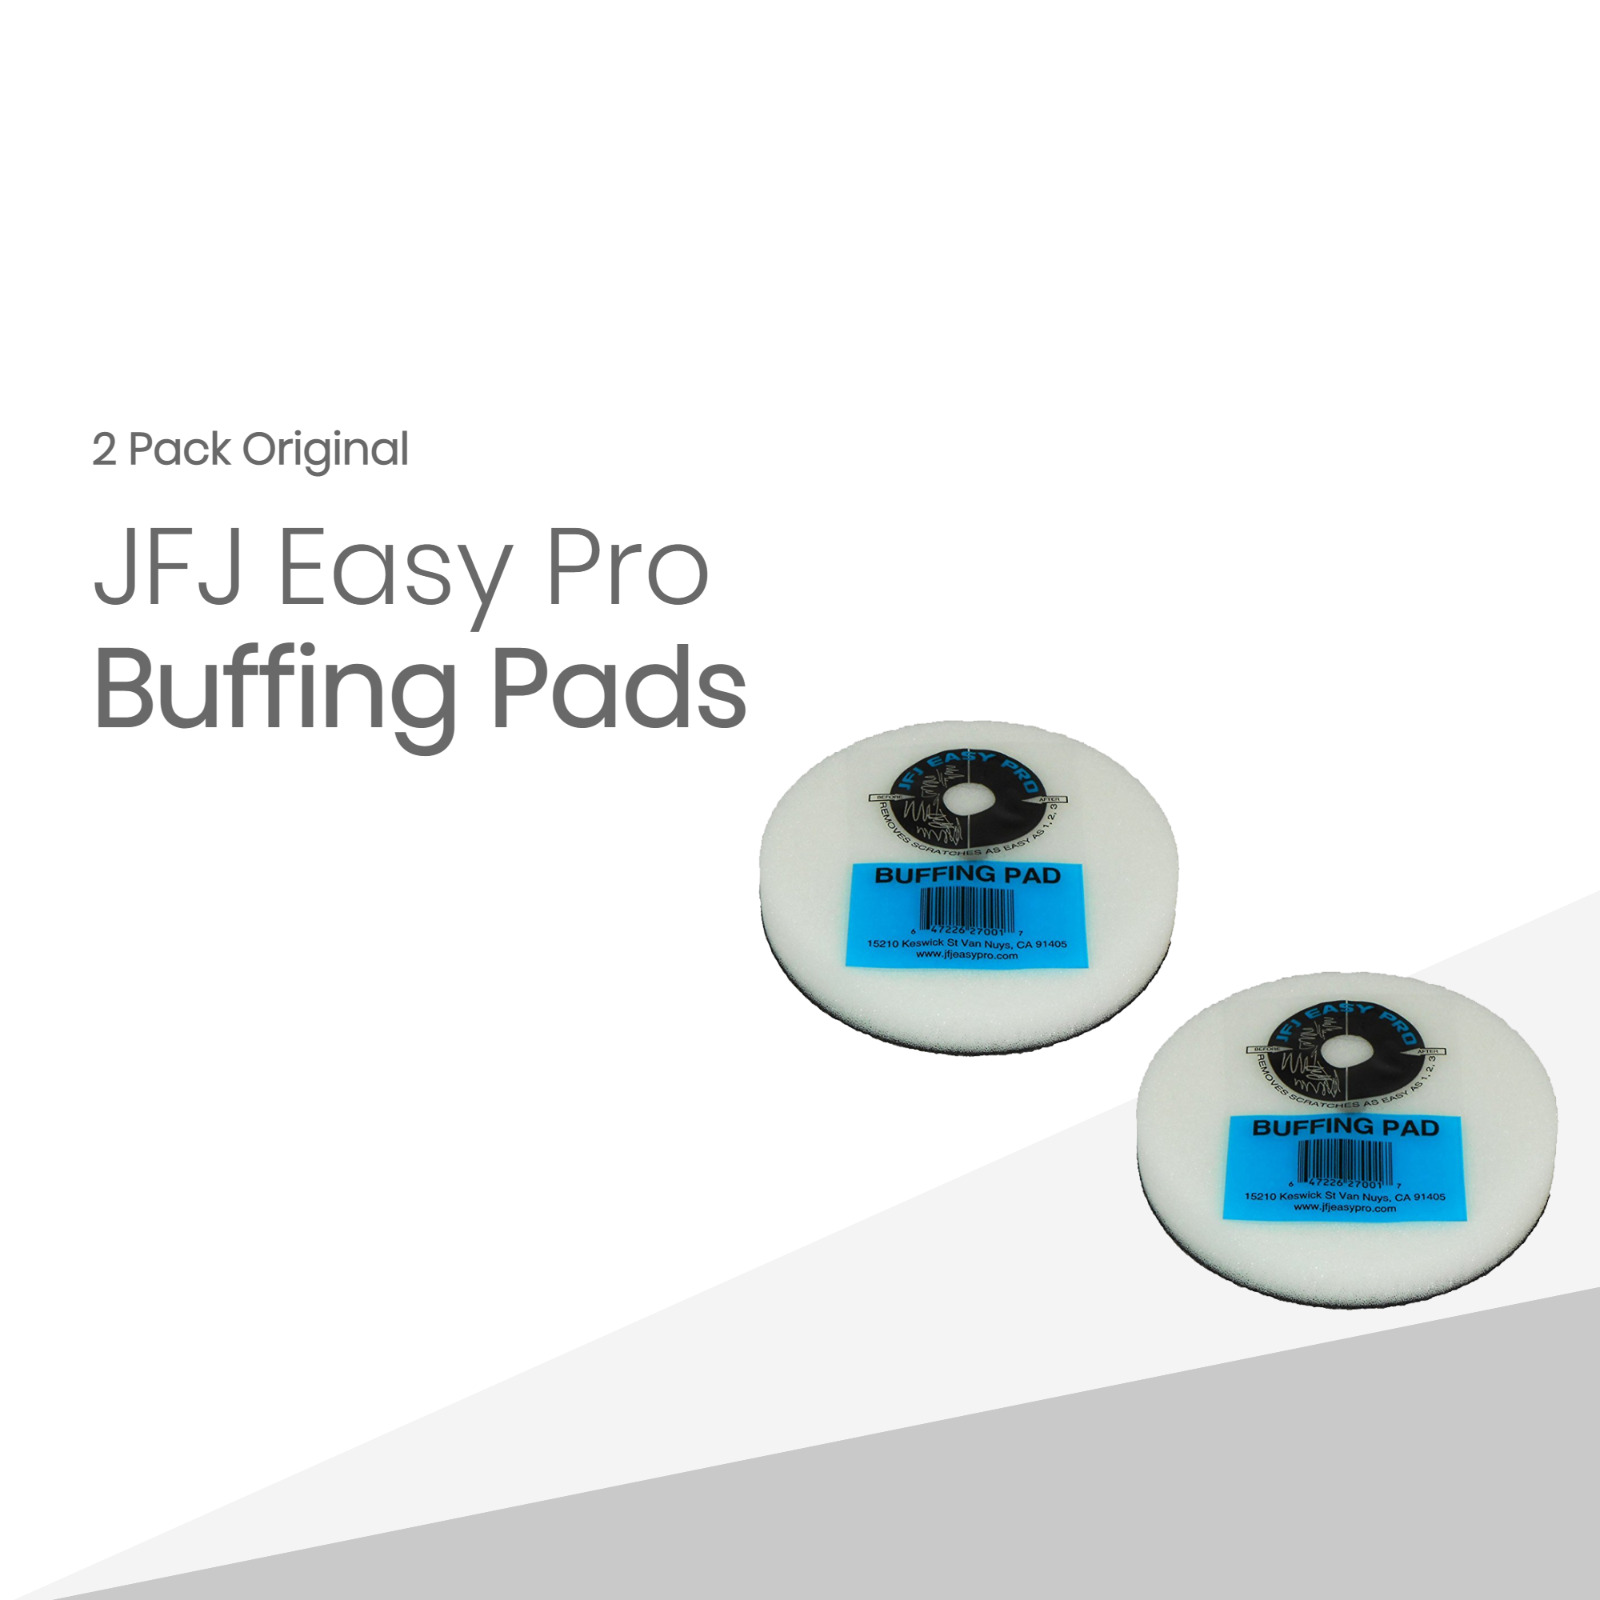 New Beautiful 2 Pack Original Jfj Easy Pro Buffing Pads